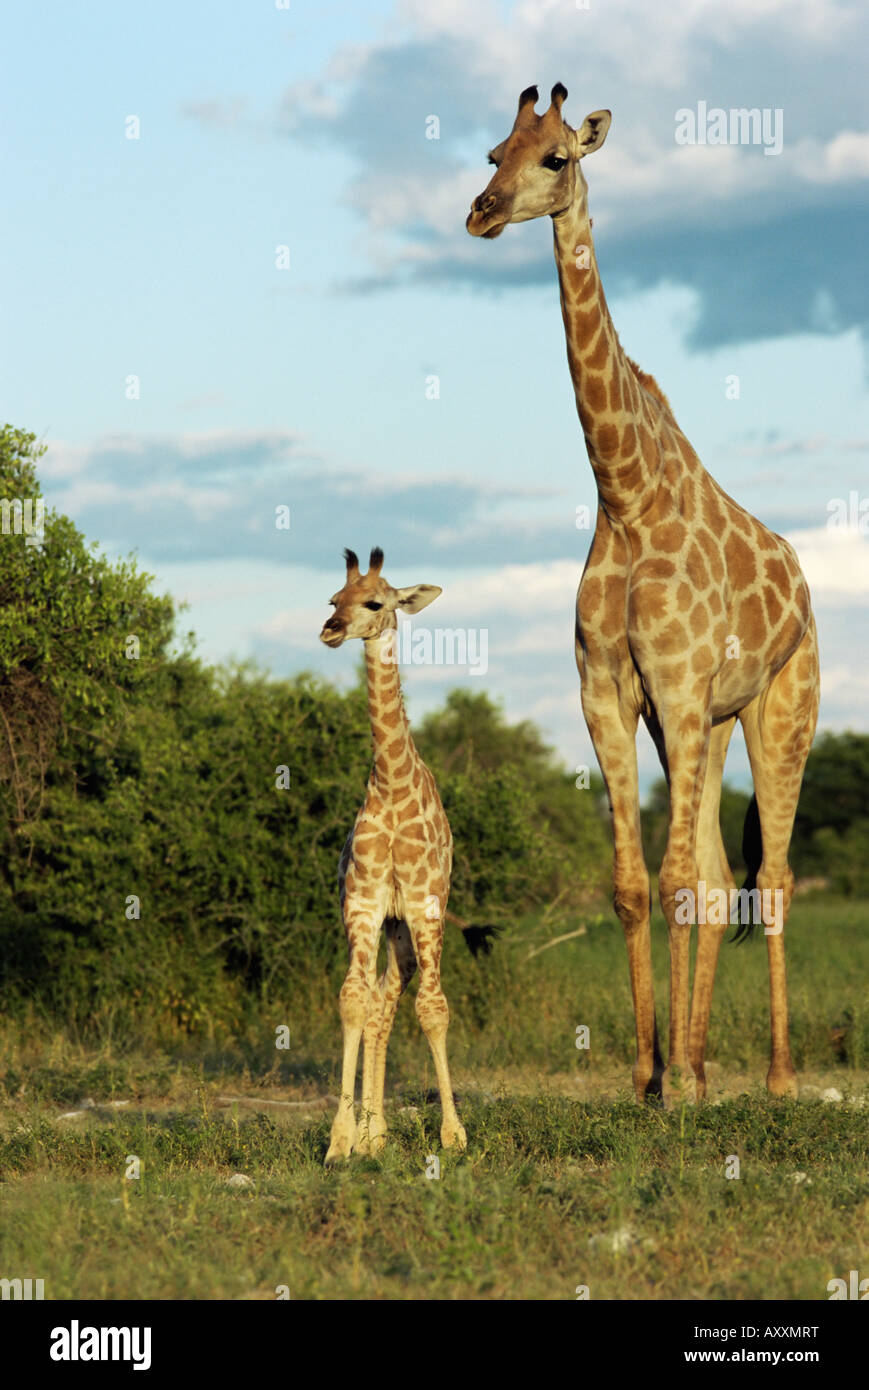 Adult and young giraffe (Giraffa camelopardalis), Etosha National Park, Namibia, Africa Stock Photo